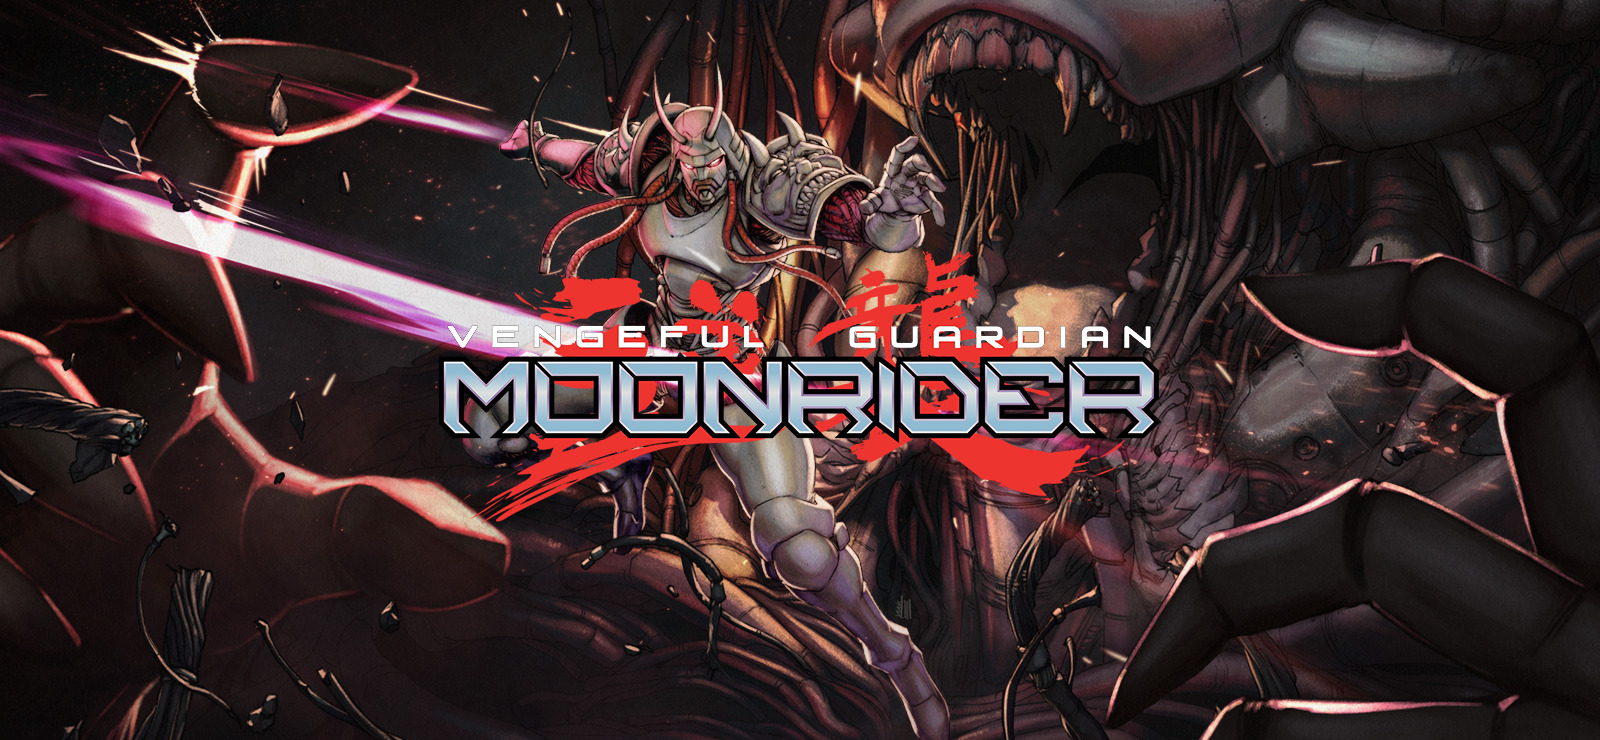 Vengeful Guardian: Moonrider on